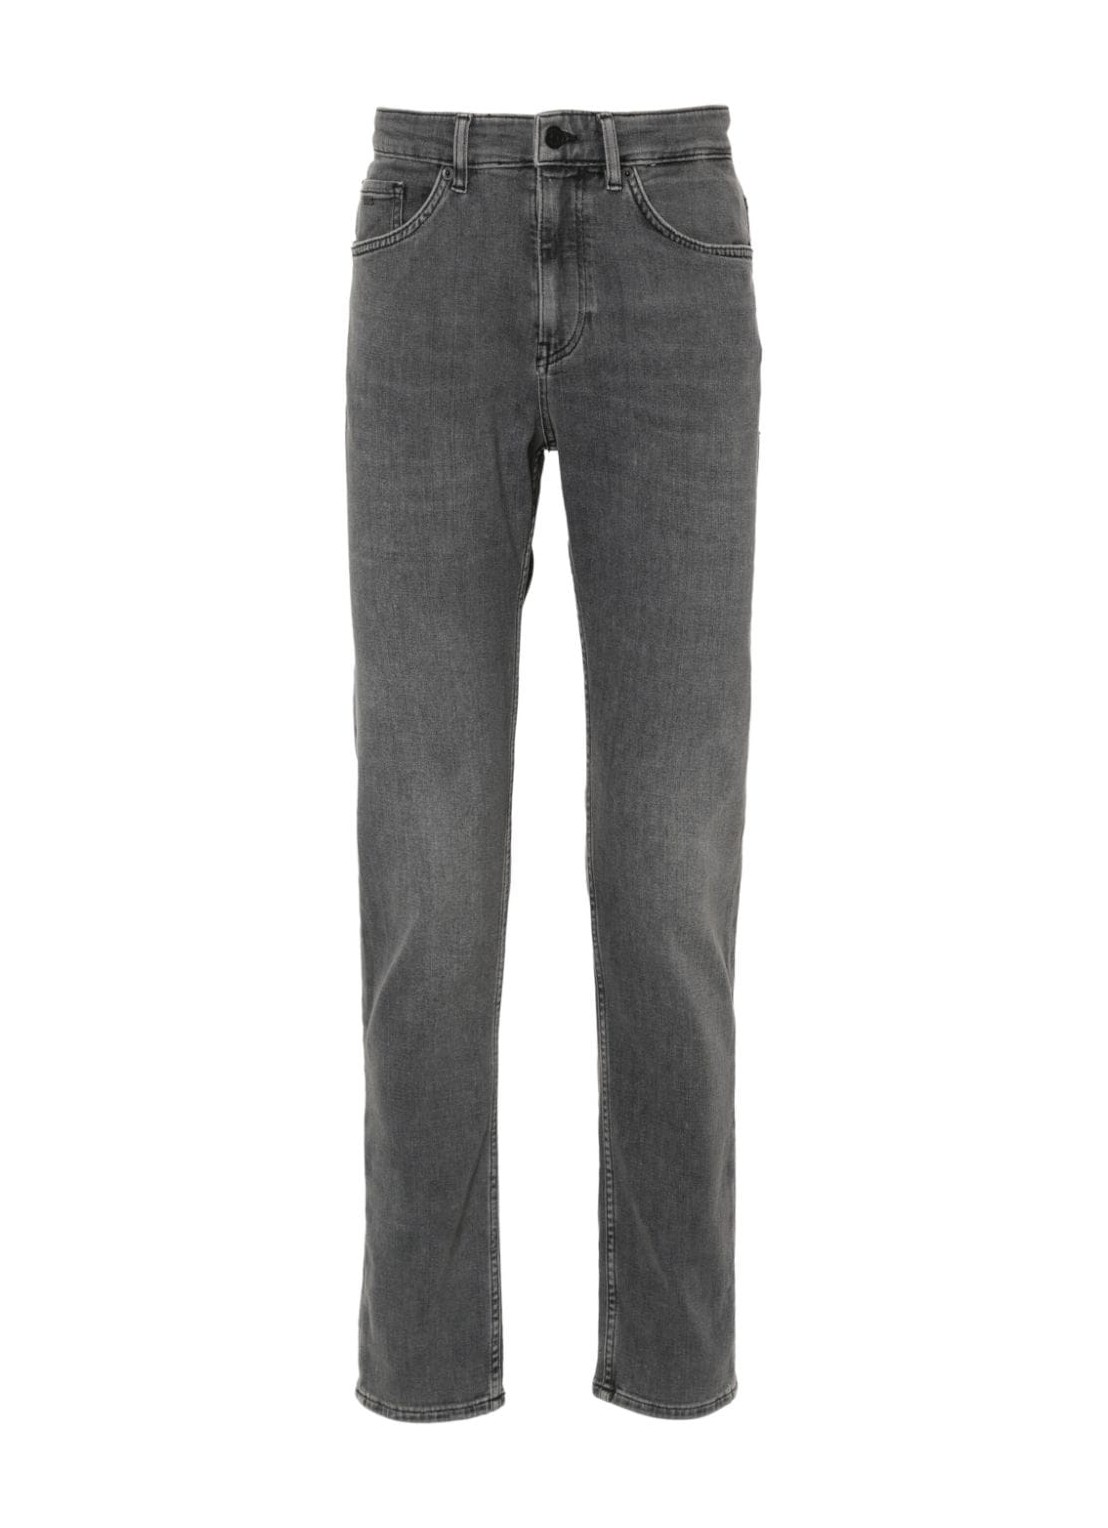 Pantalon jeans boss denim mantaber - 50508114 021 talla gris
 